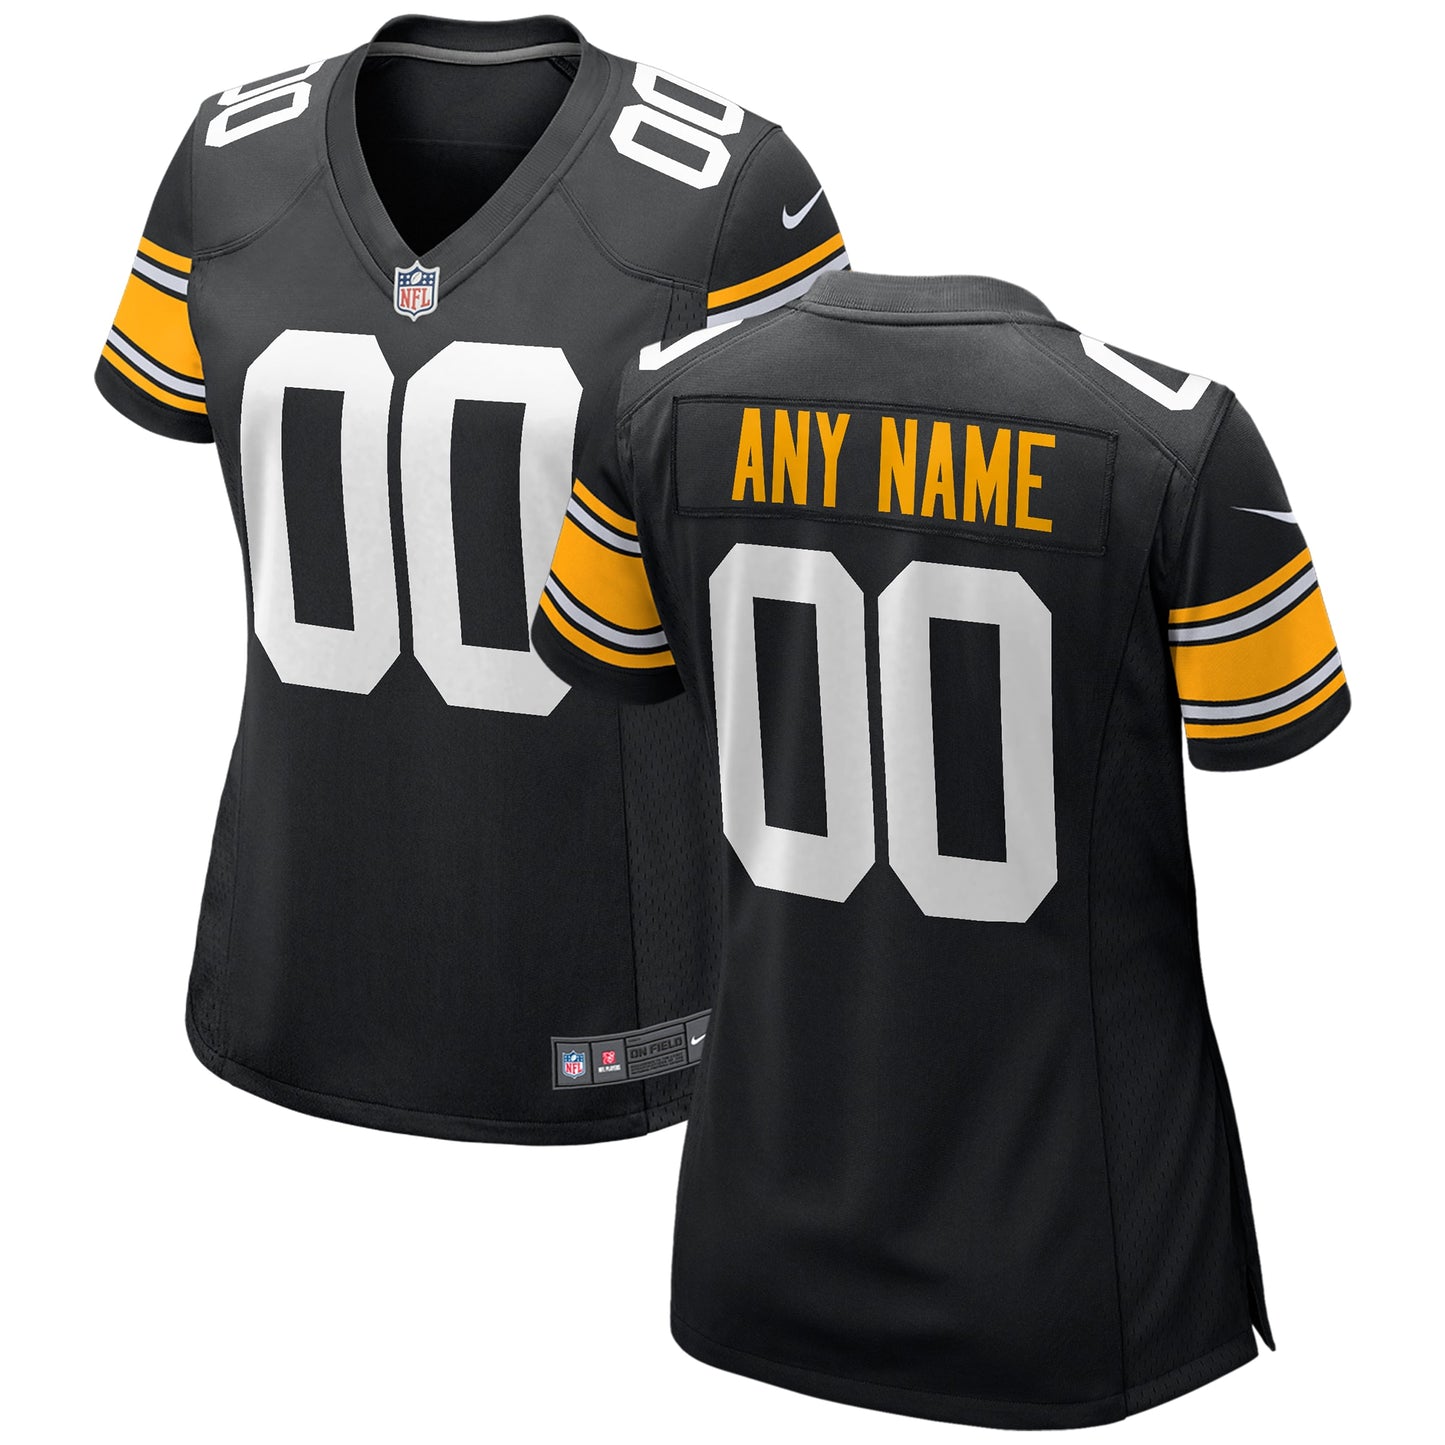 Pittsburgh Steelers Nike Women's Alternate Custom Game Jersey - Black